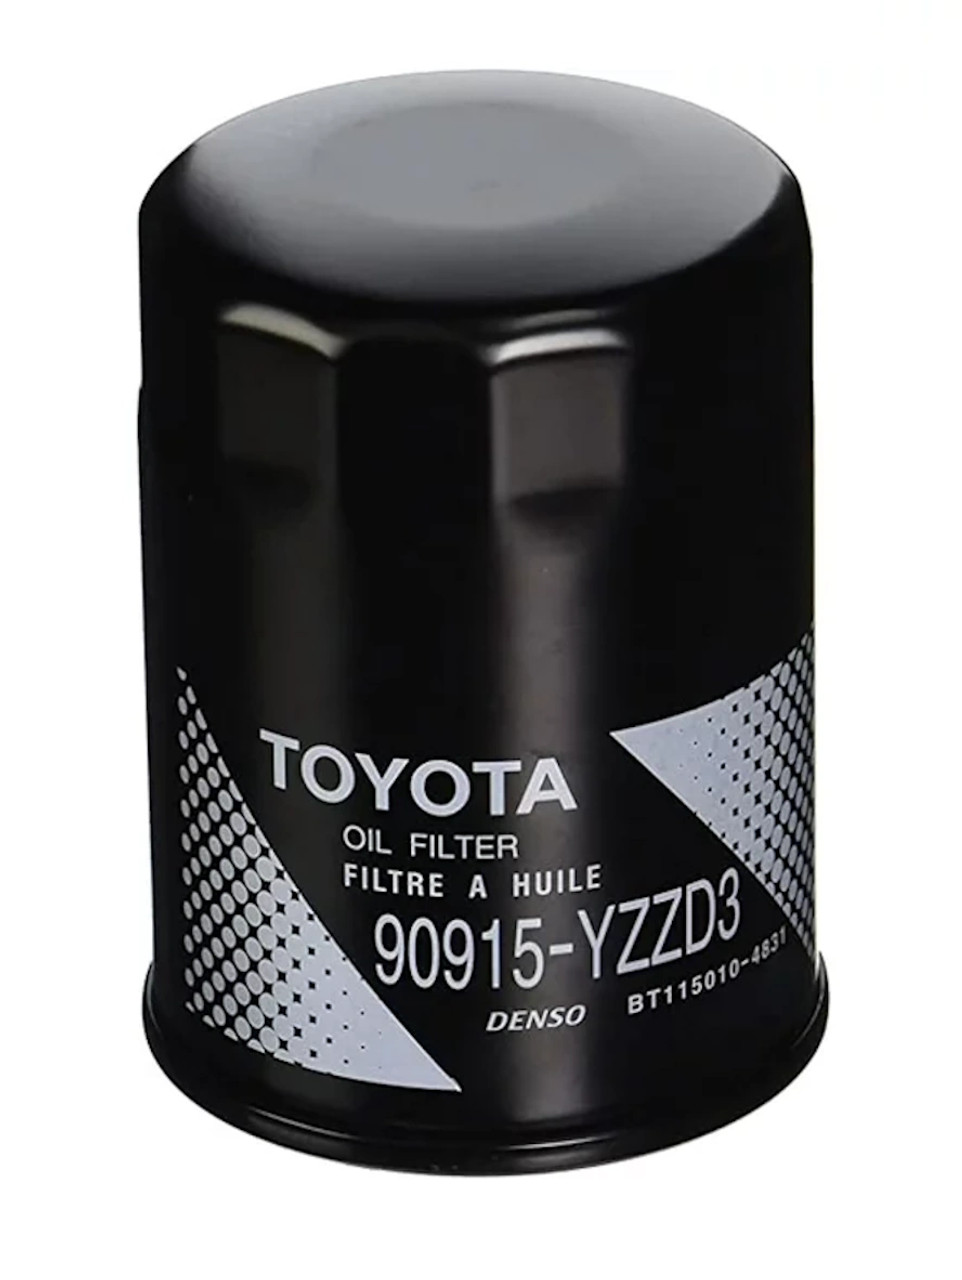 Oil Filter- Genuine Toyota Oil Filter 90915-YZZD3